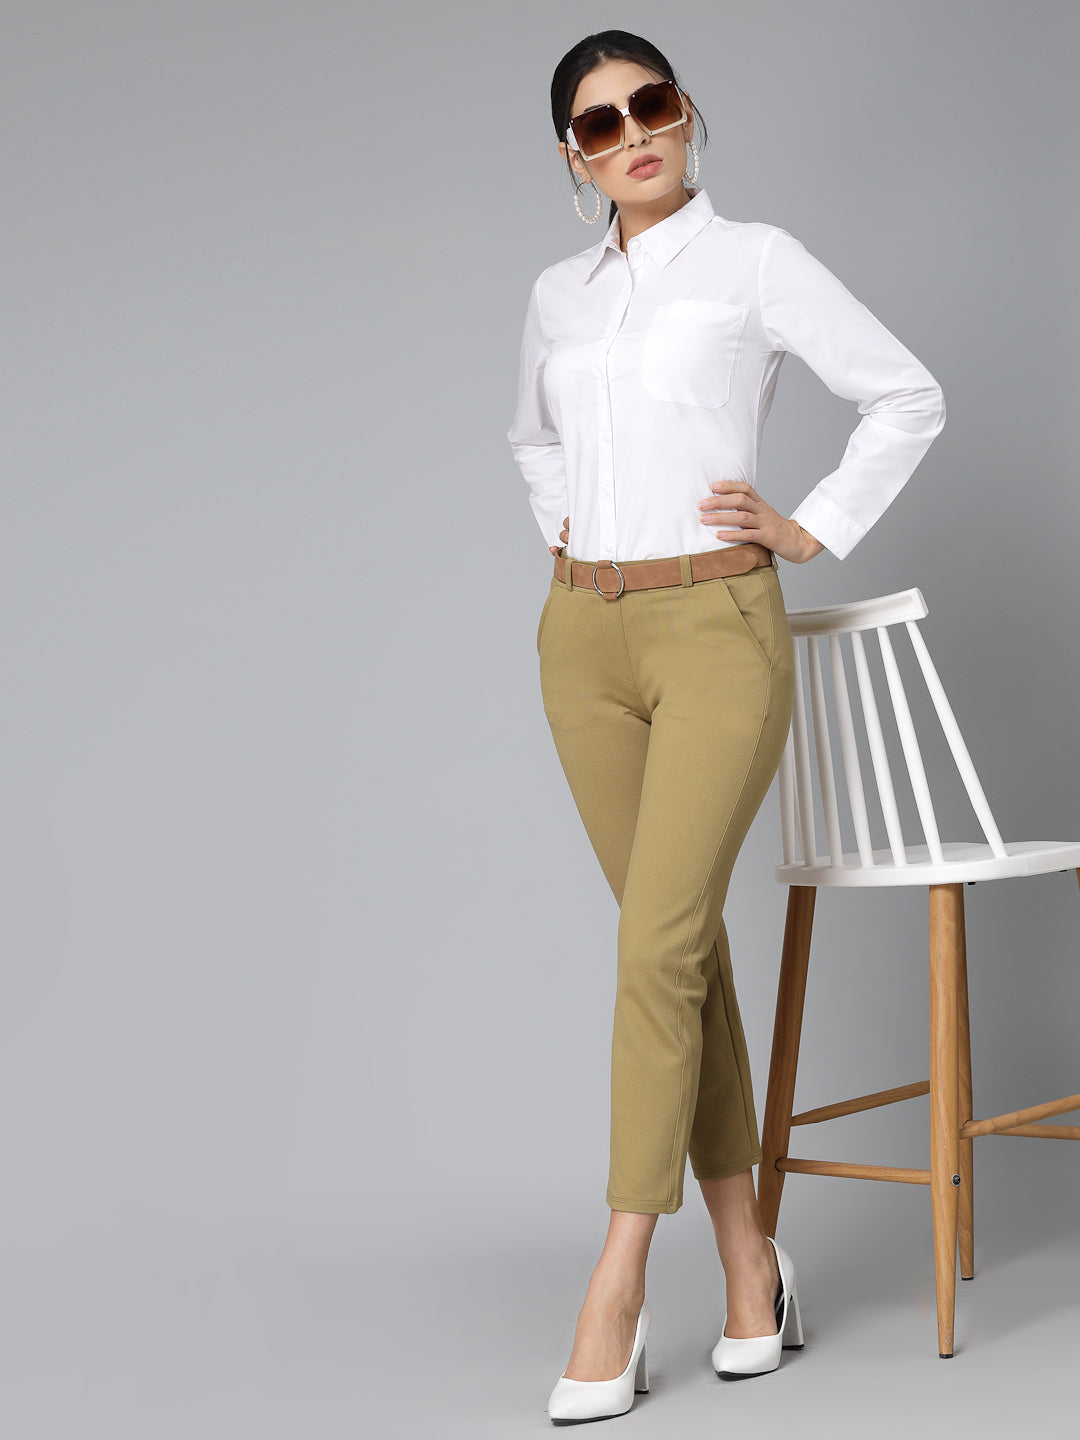 Buy Style Quotient Women White Cotton Blend Casual Oversized Shirt online